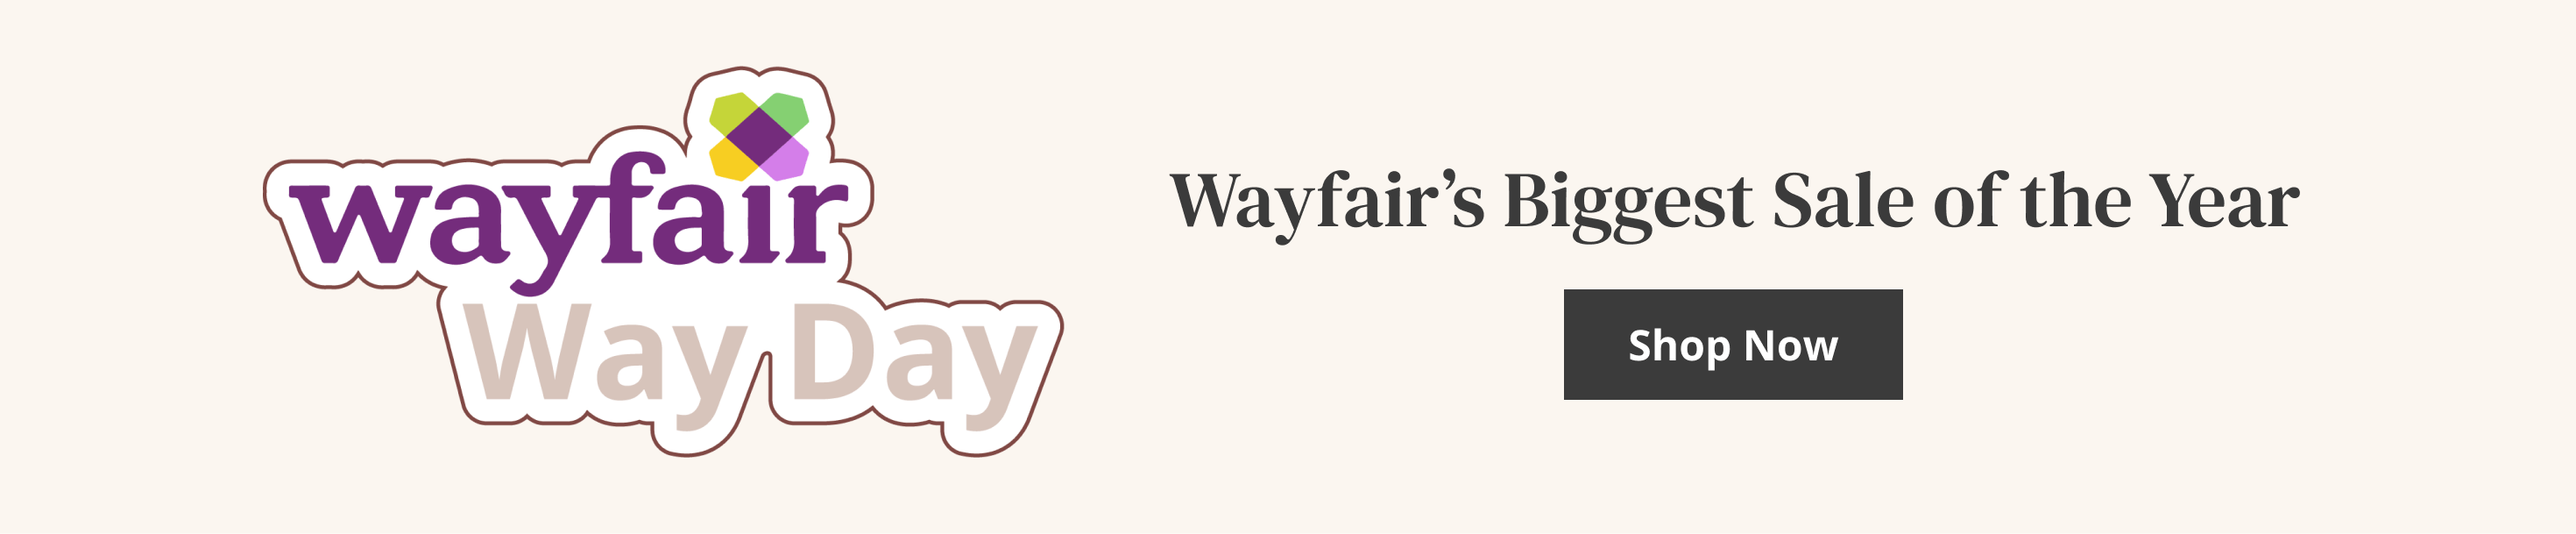 wayfair way day banner